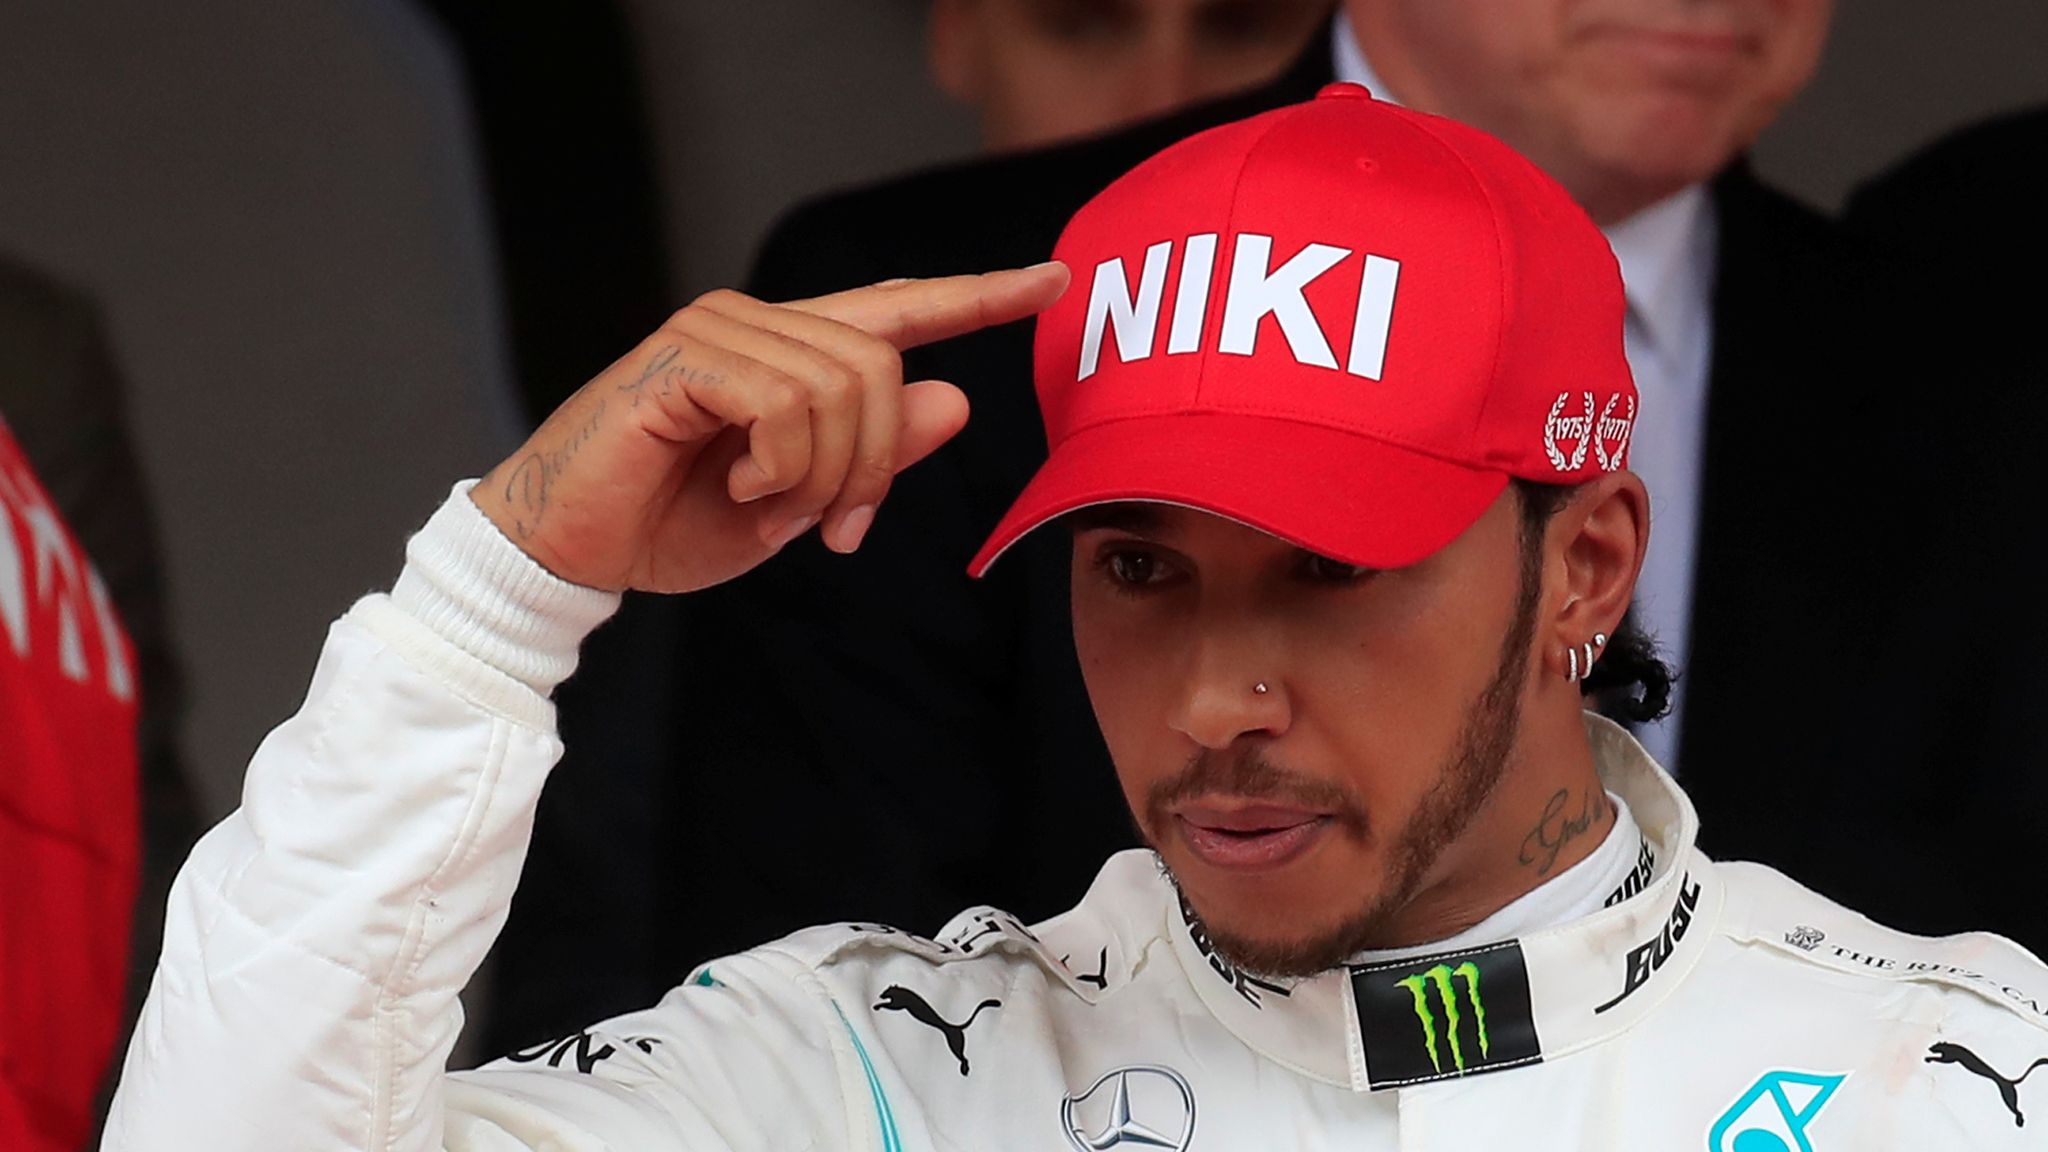 Se insekter loop Mindful Lewis Hamilton 'tried to make Niki Lauda proud' in dramatic Monaco GP win |  World News | Sky News